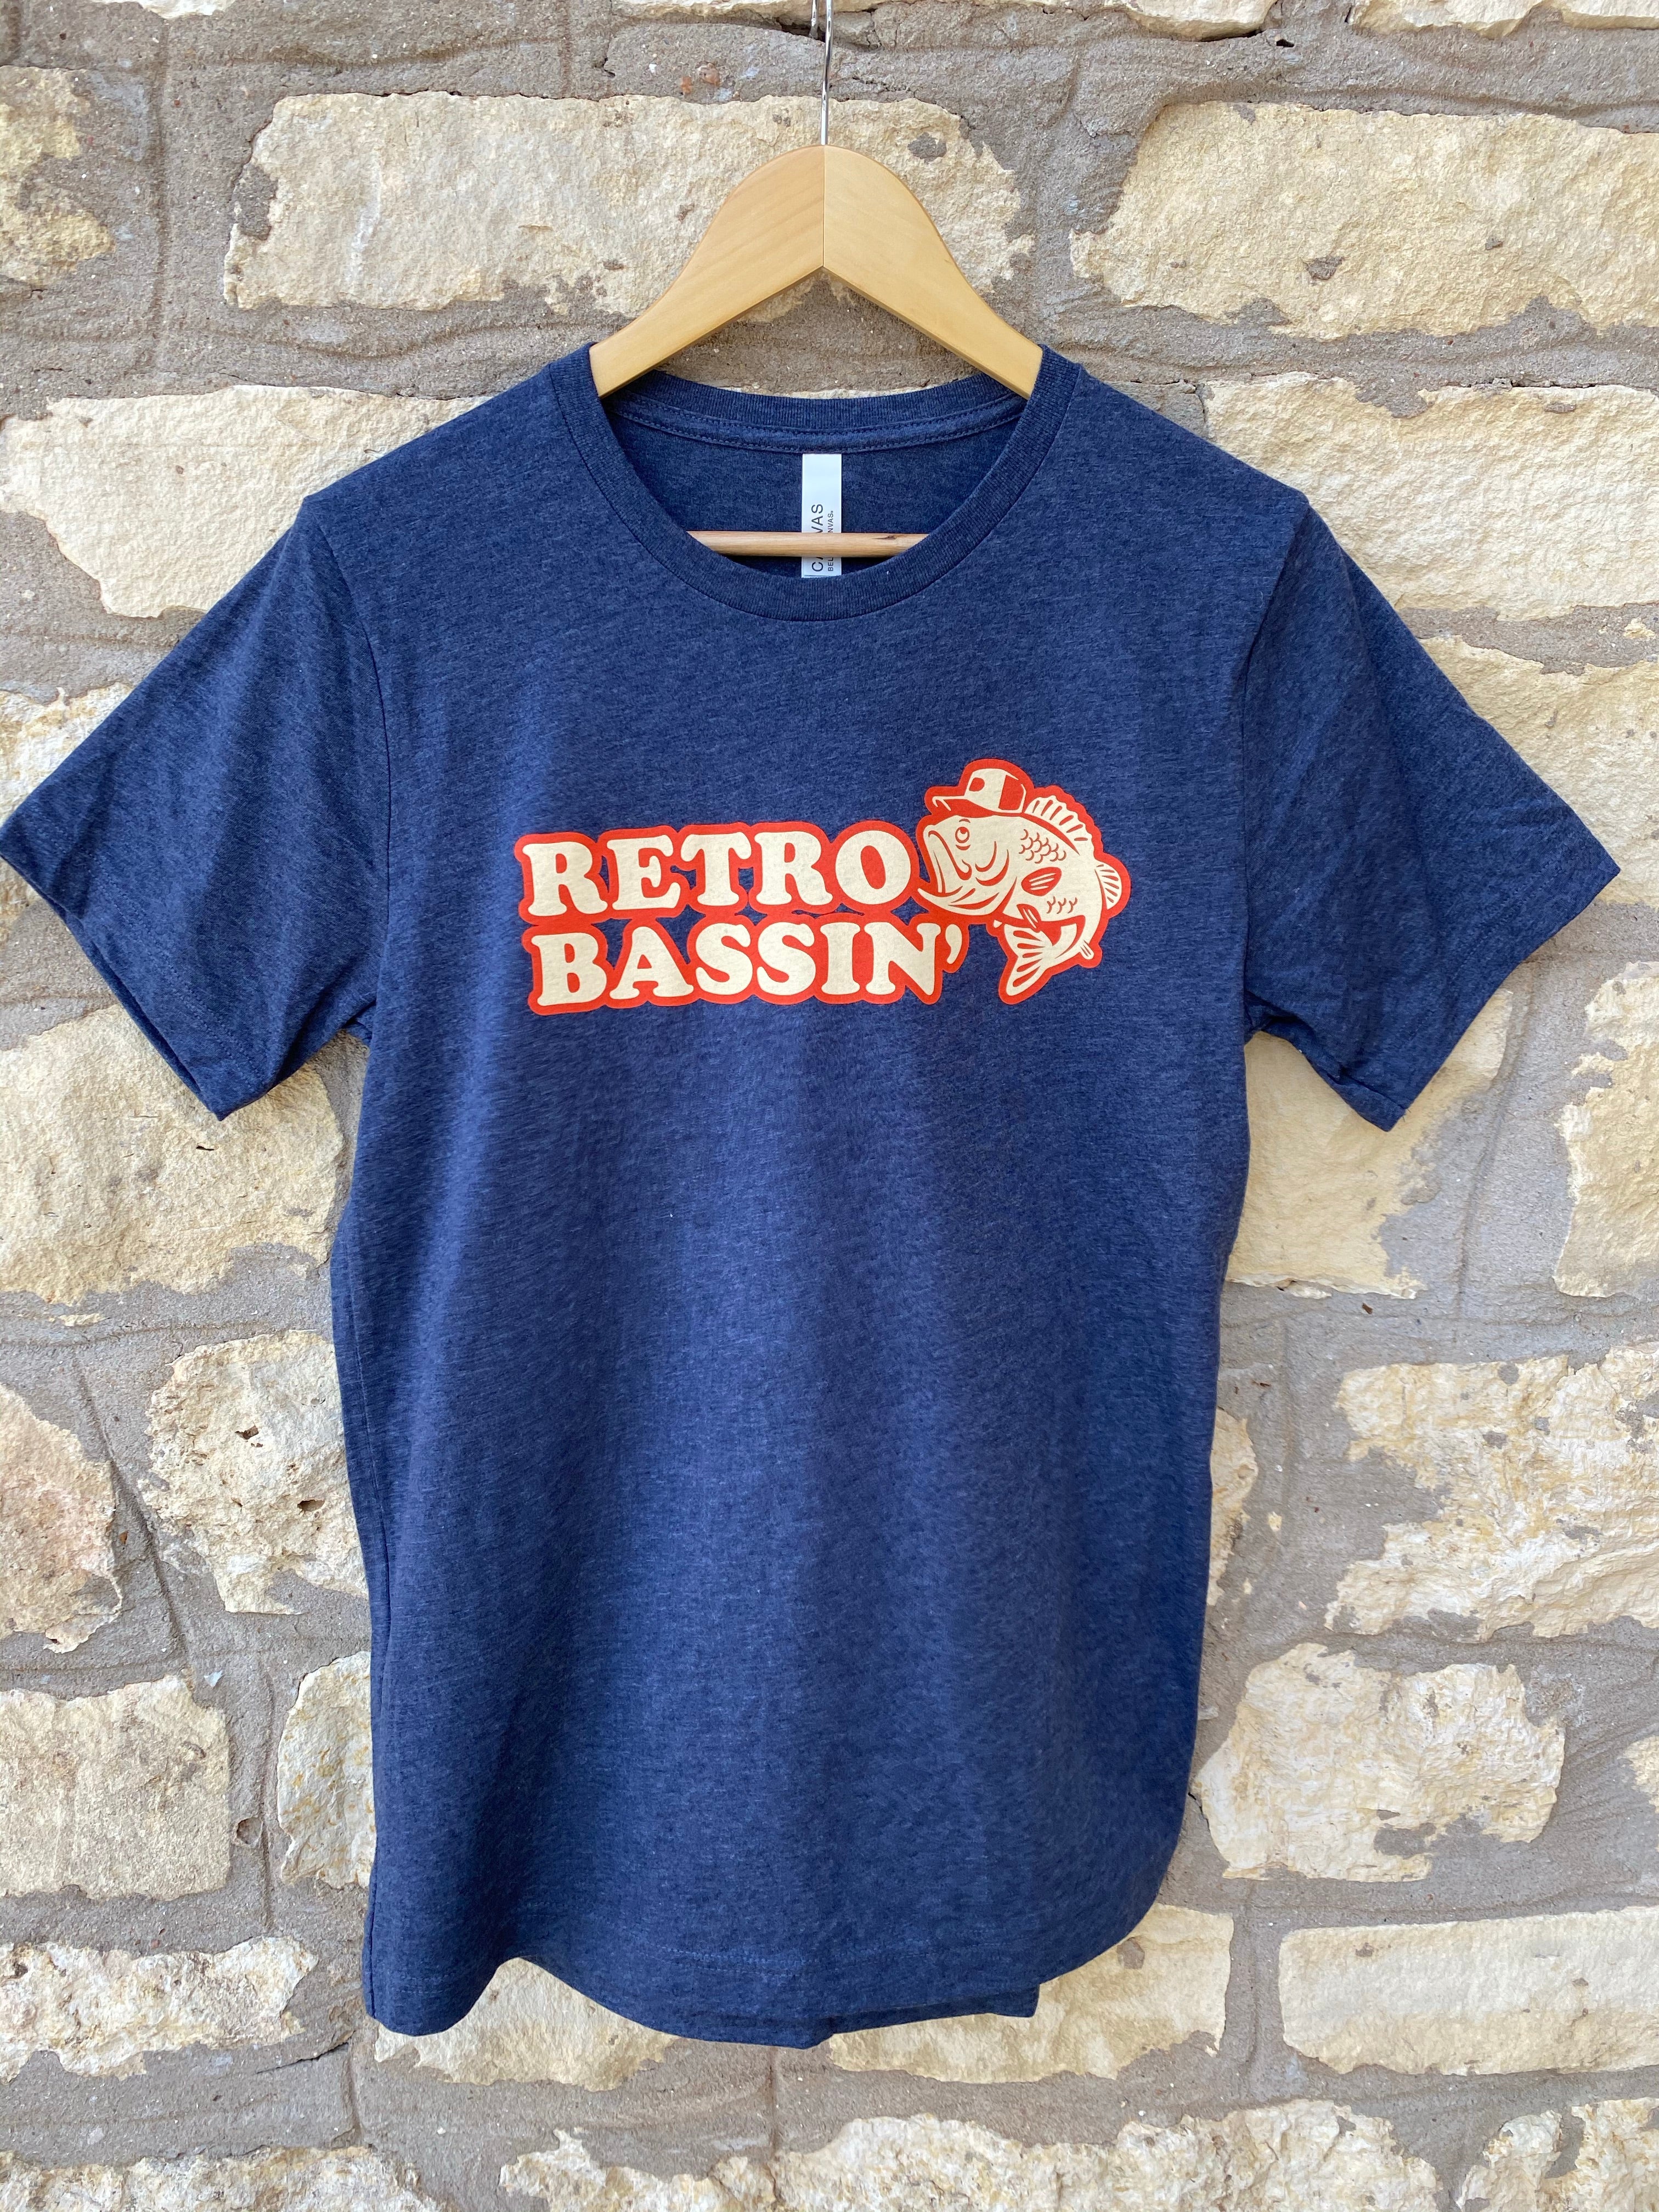 Retro Bassin’ Throwback Tee Shirt